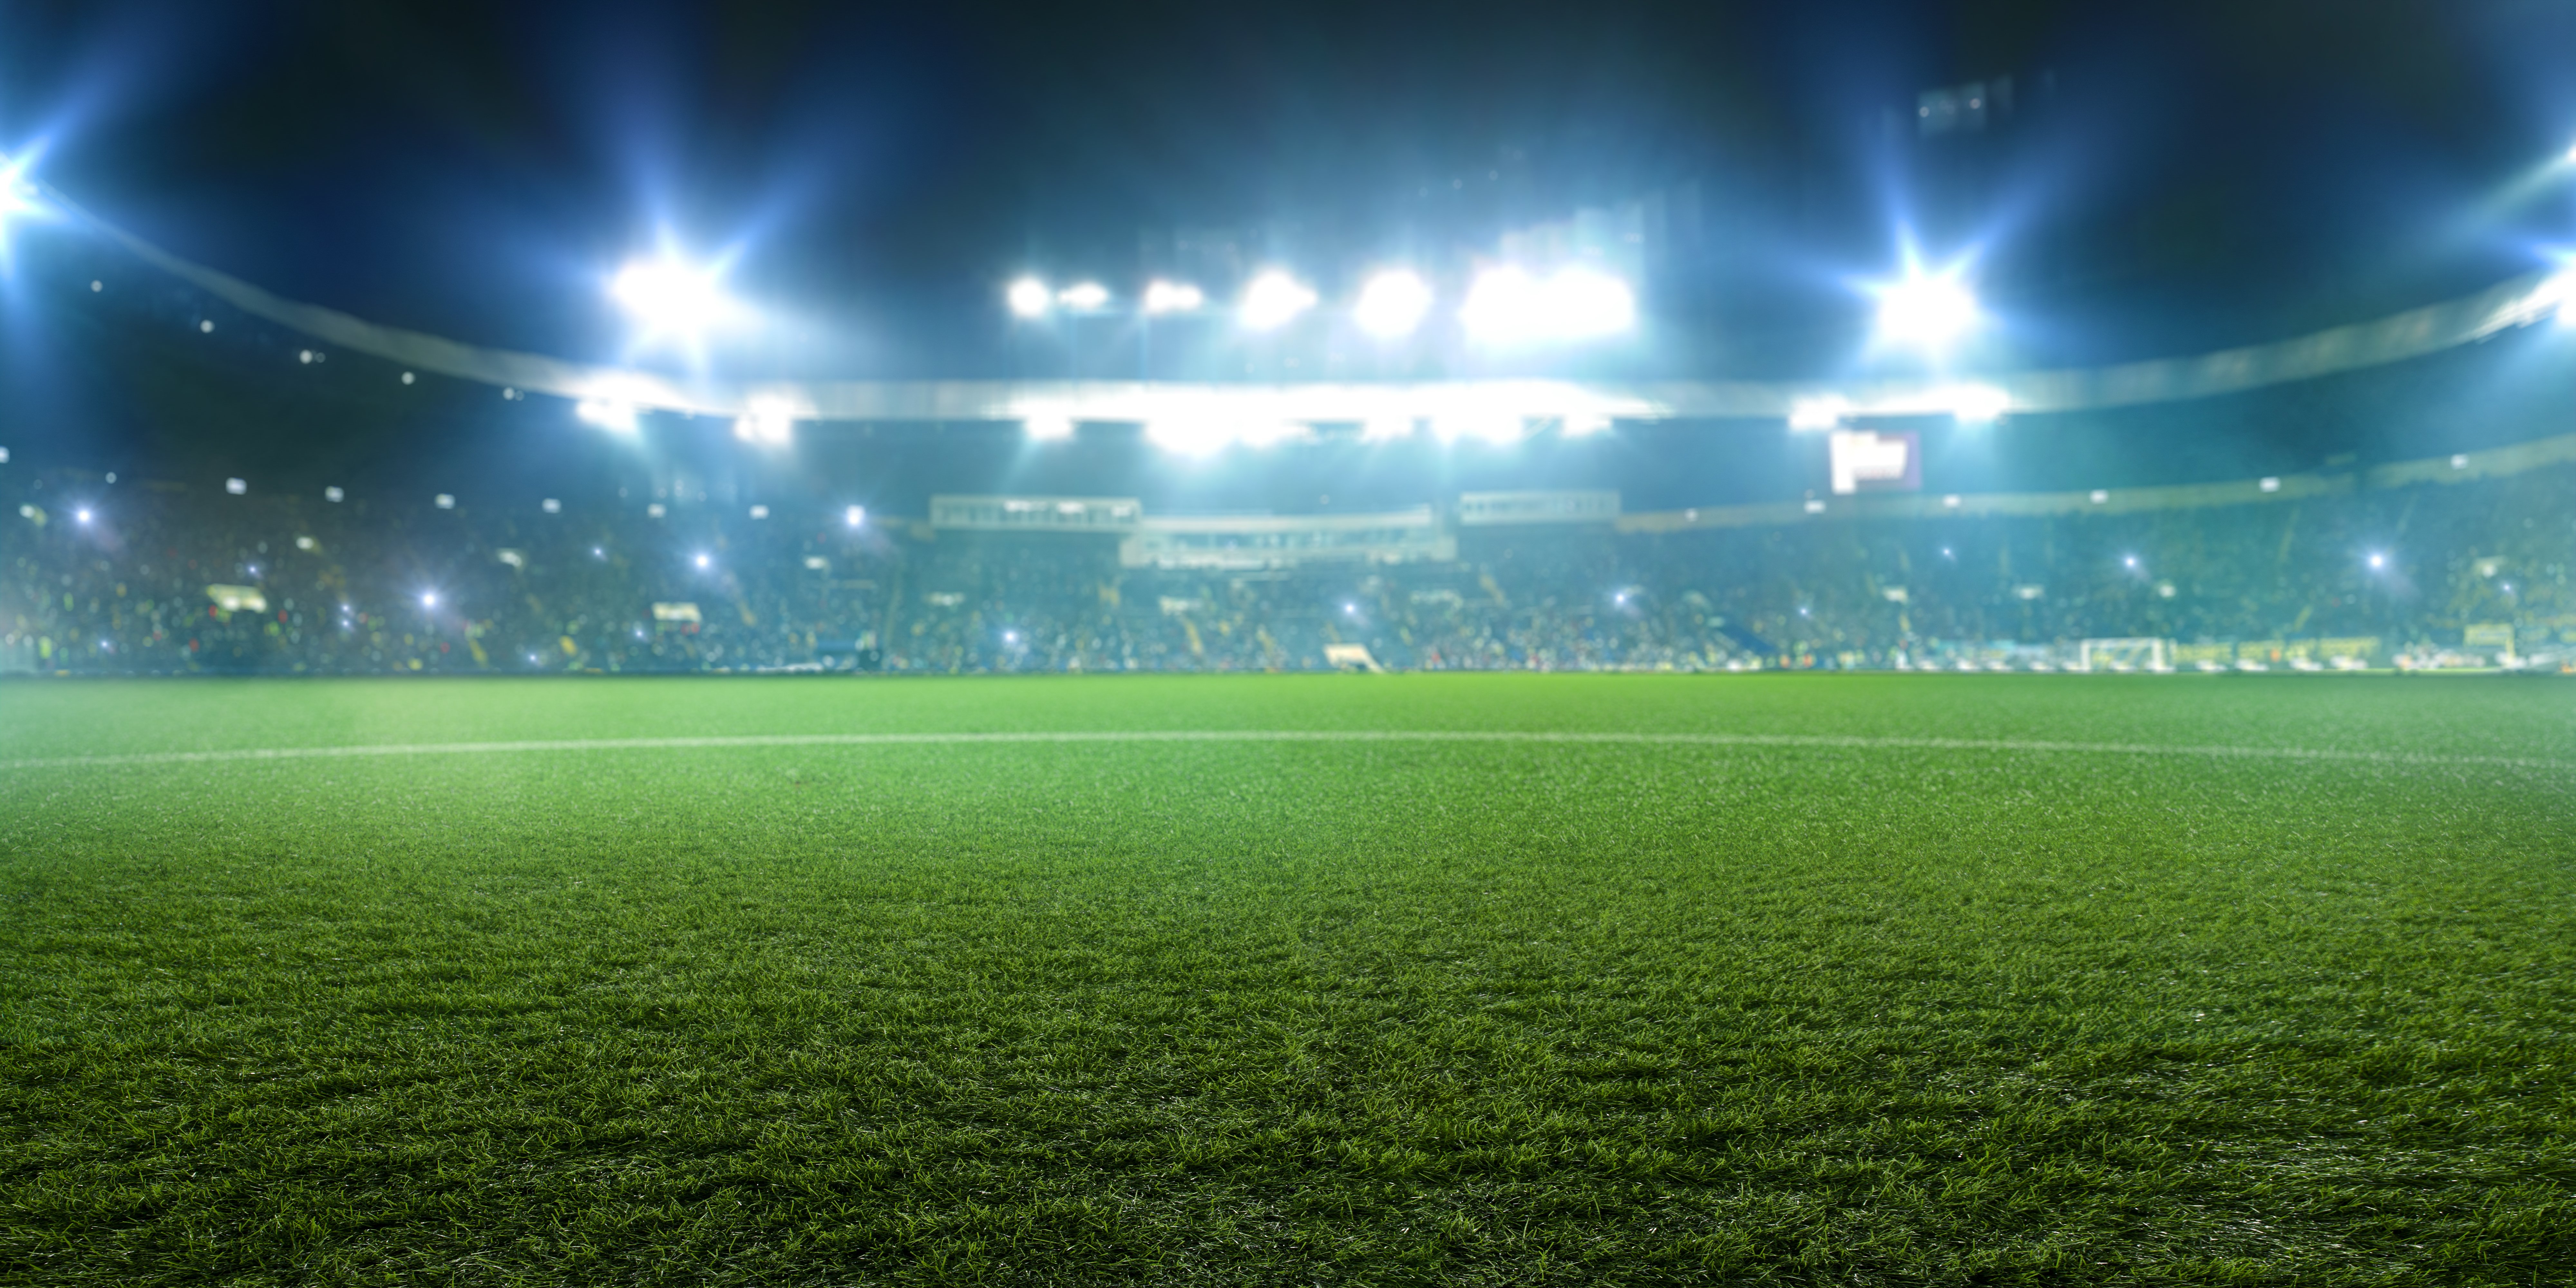 football-stadium-shiny-lights-view-from-field-2021-08-26-16-26-35-utc